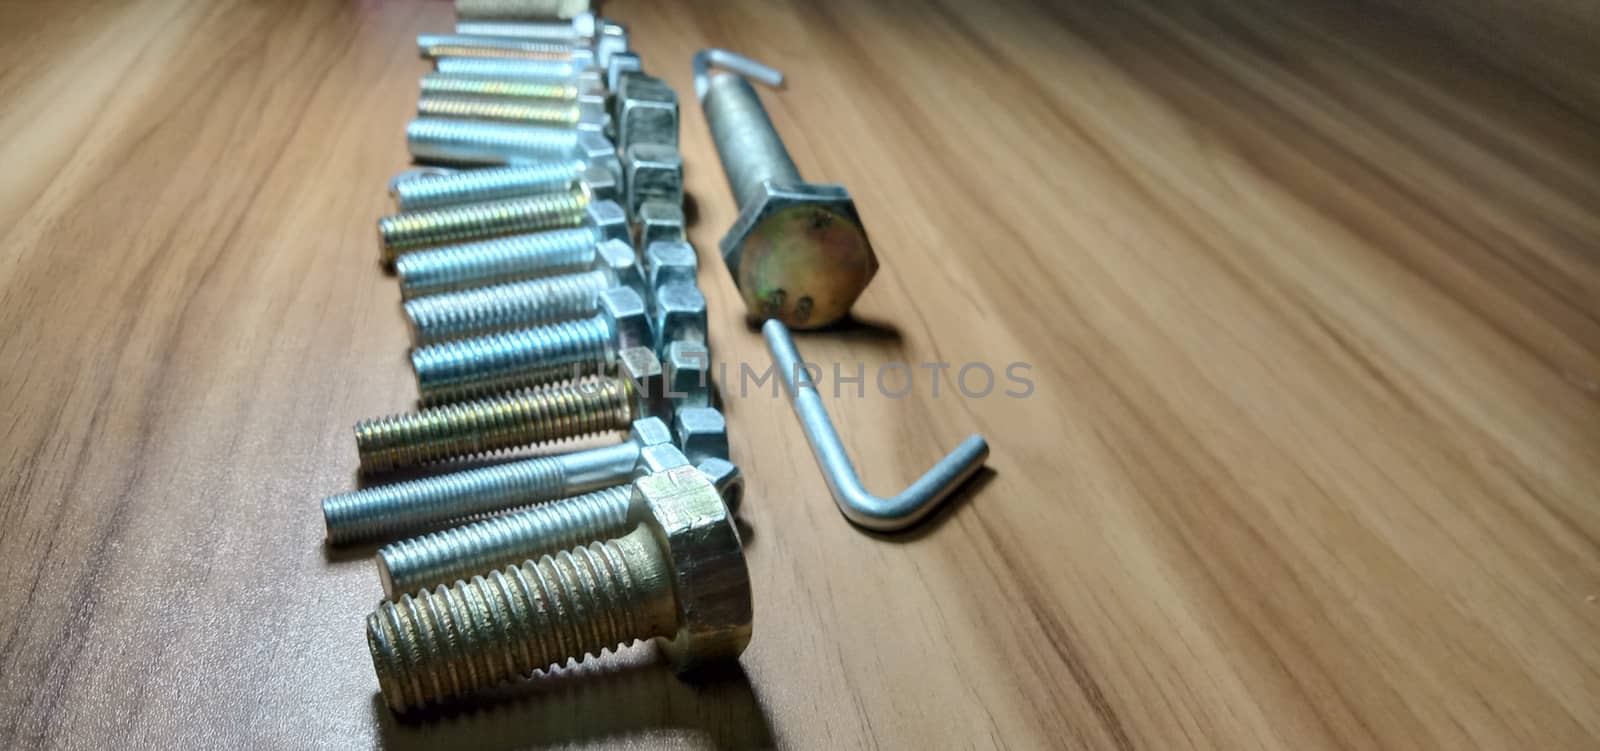 Iron Made Nut and Bolt Closeup by jahidul2358